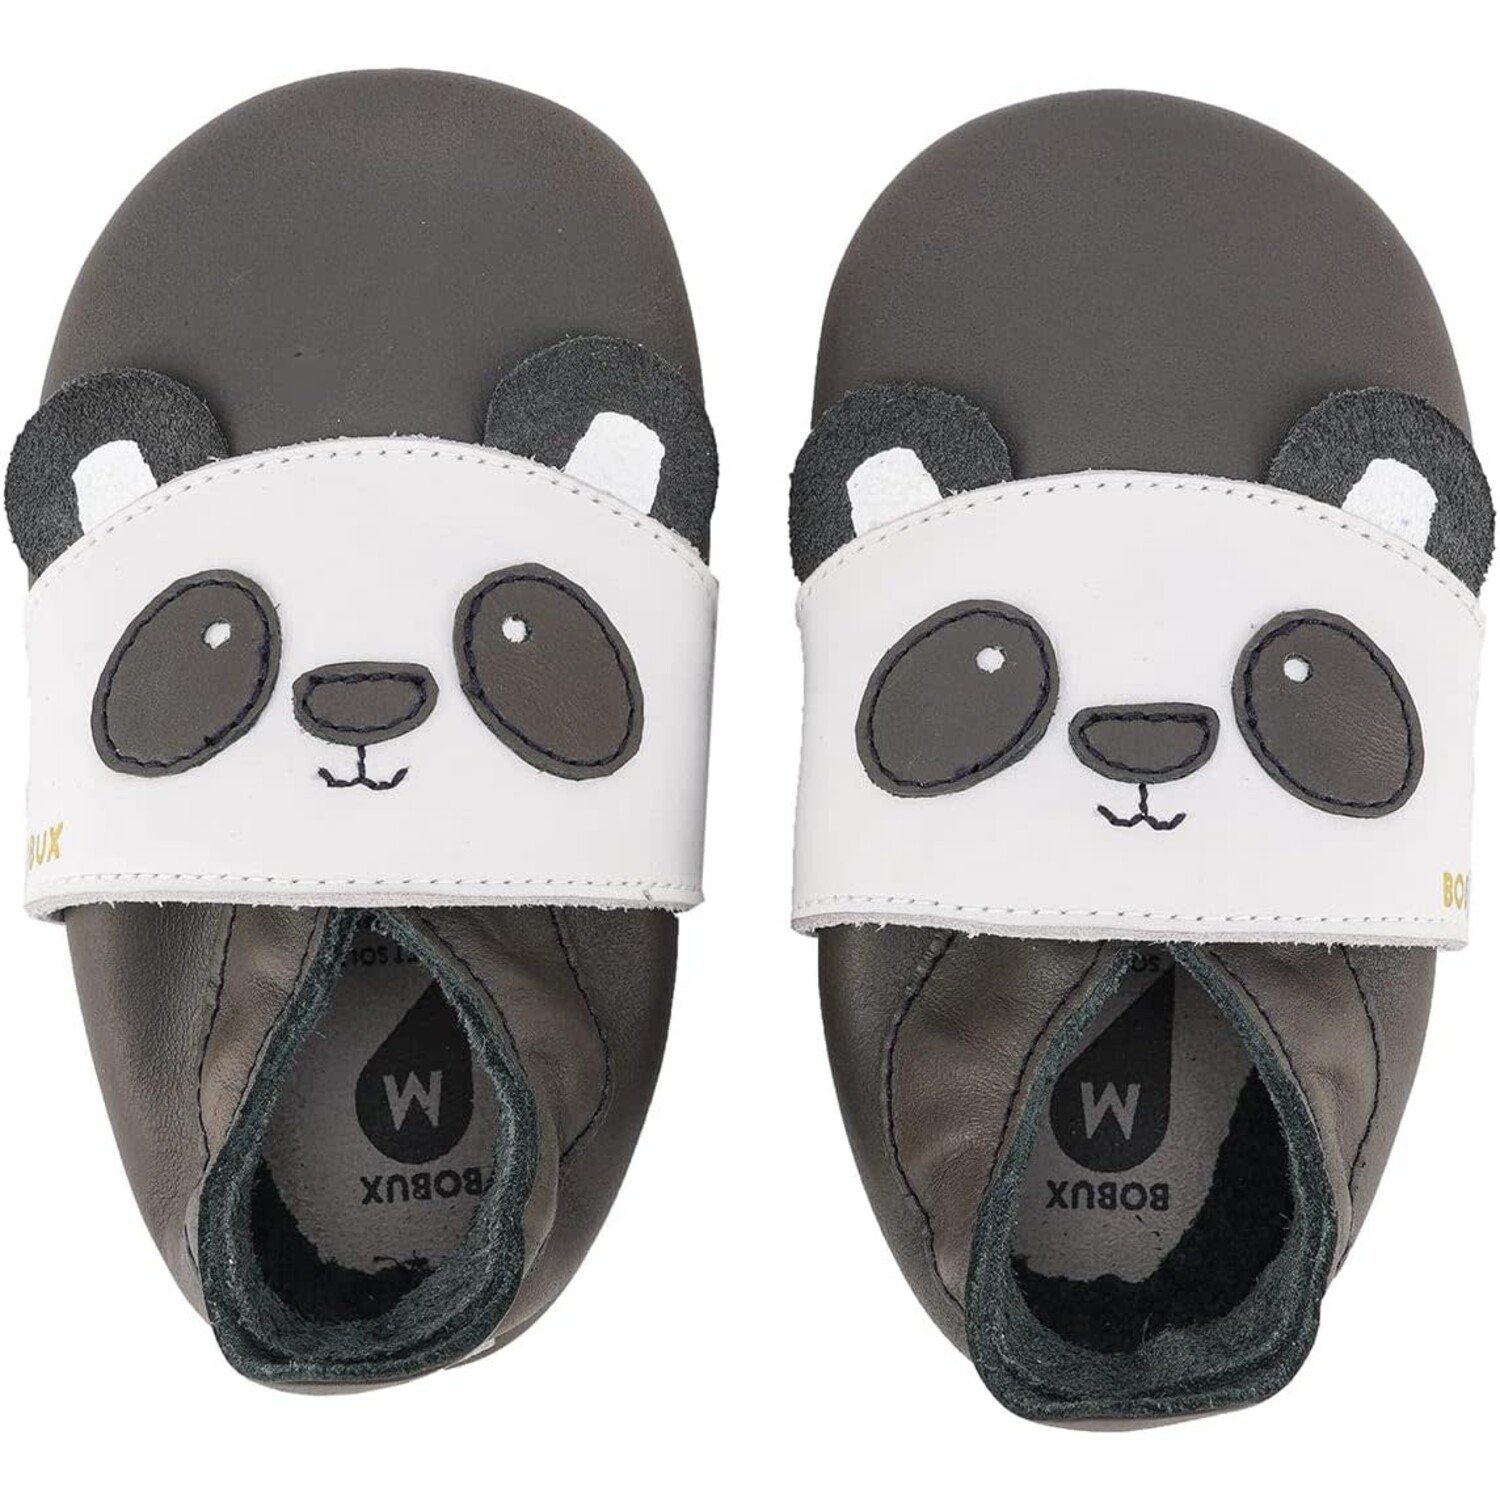 Chaussons Pattes de Panda l Chaussons Animaux l Pyjama Panda Shop